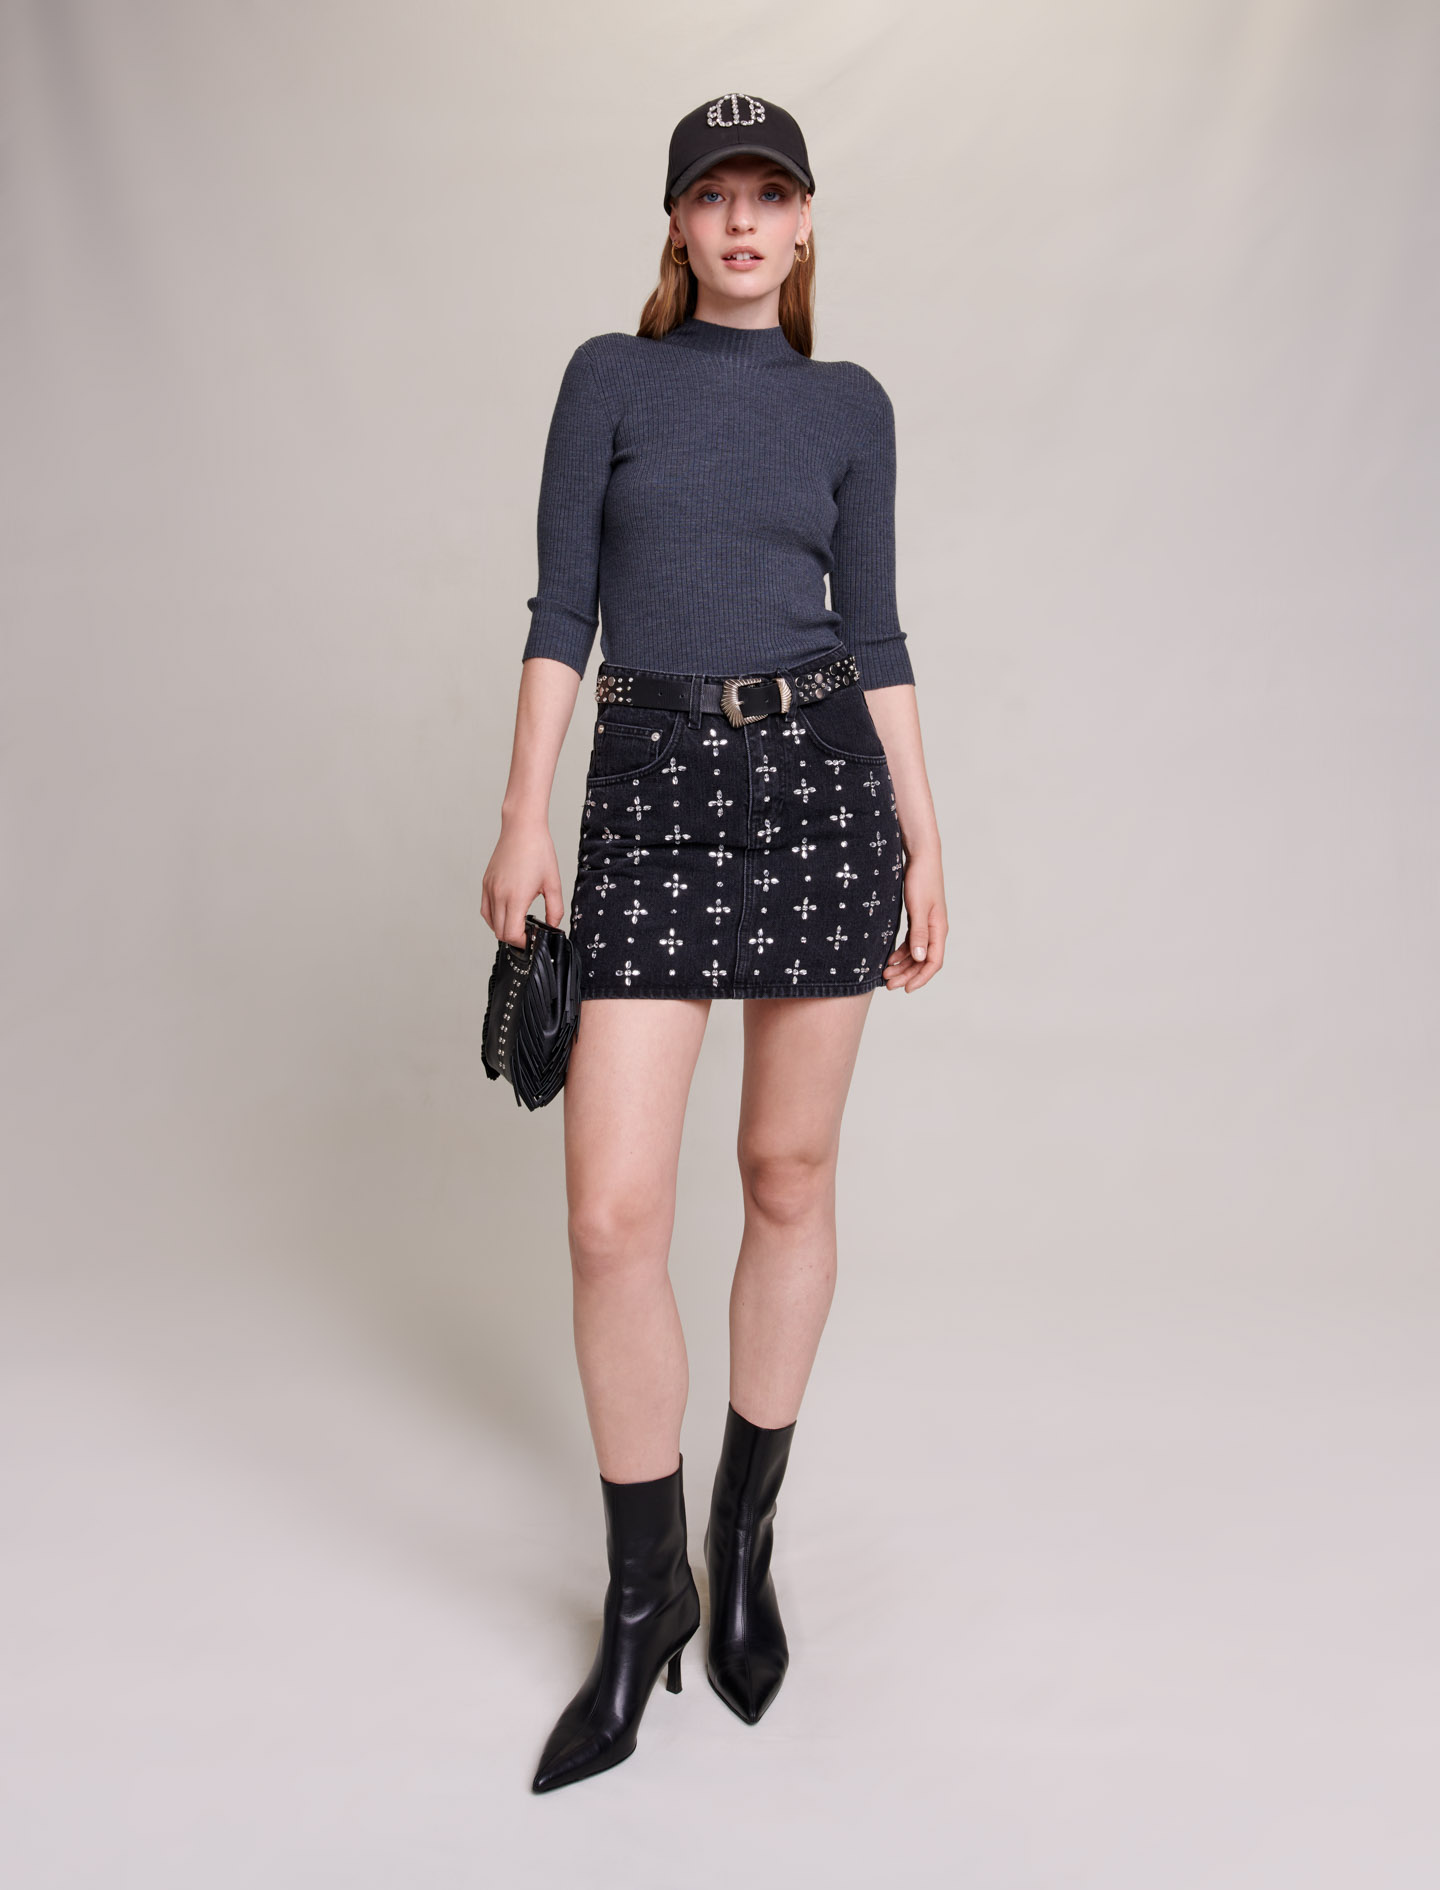 Maje Woman's cotton Pocket lining: Short denim skirt with rhinestones, in color Black / Black